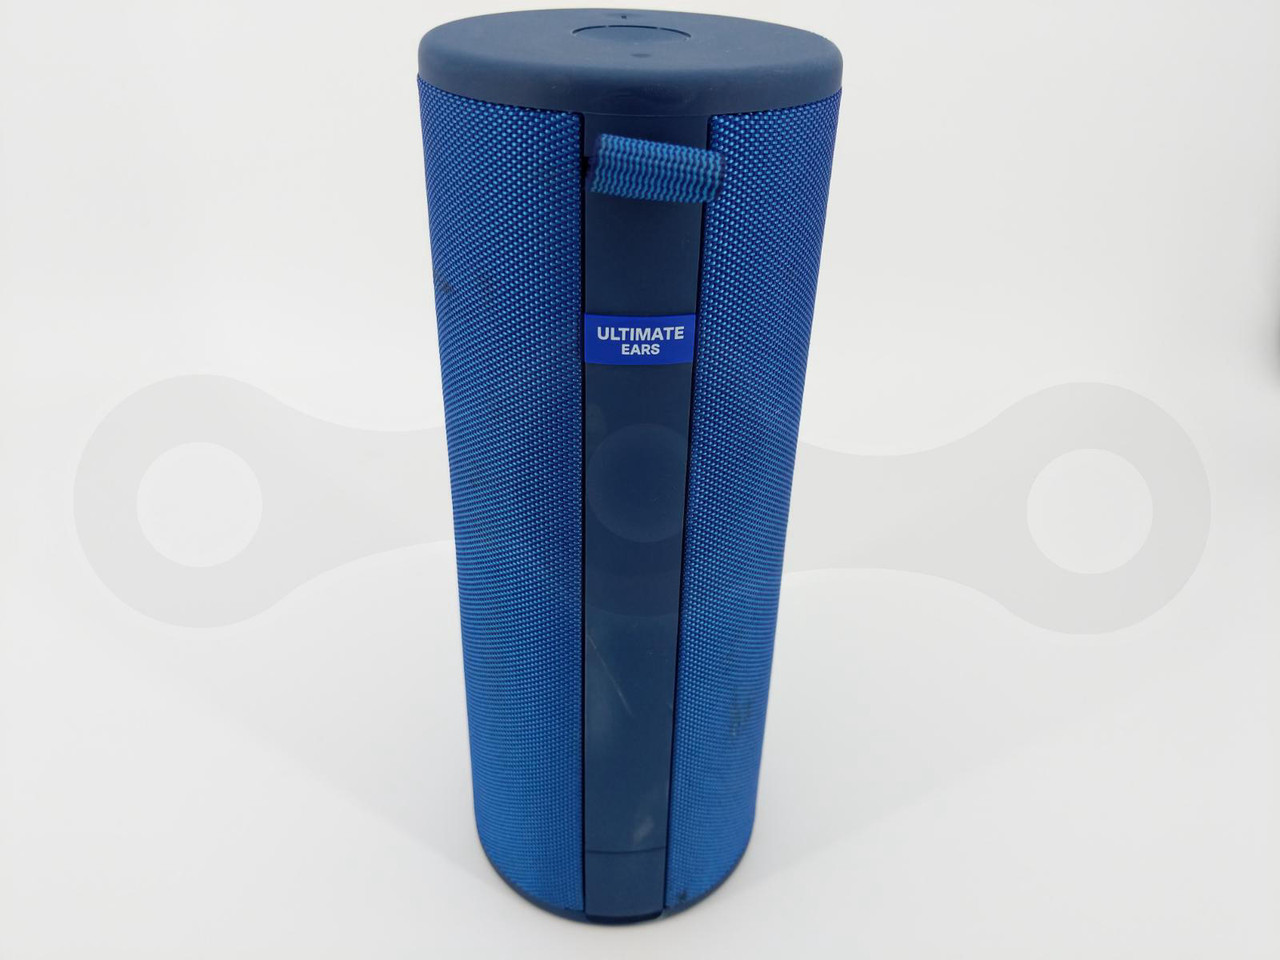 Ultimate Ears MEGABOOM 3 - speaker - for portable use - wireless